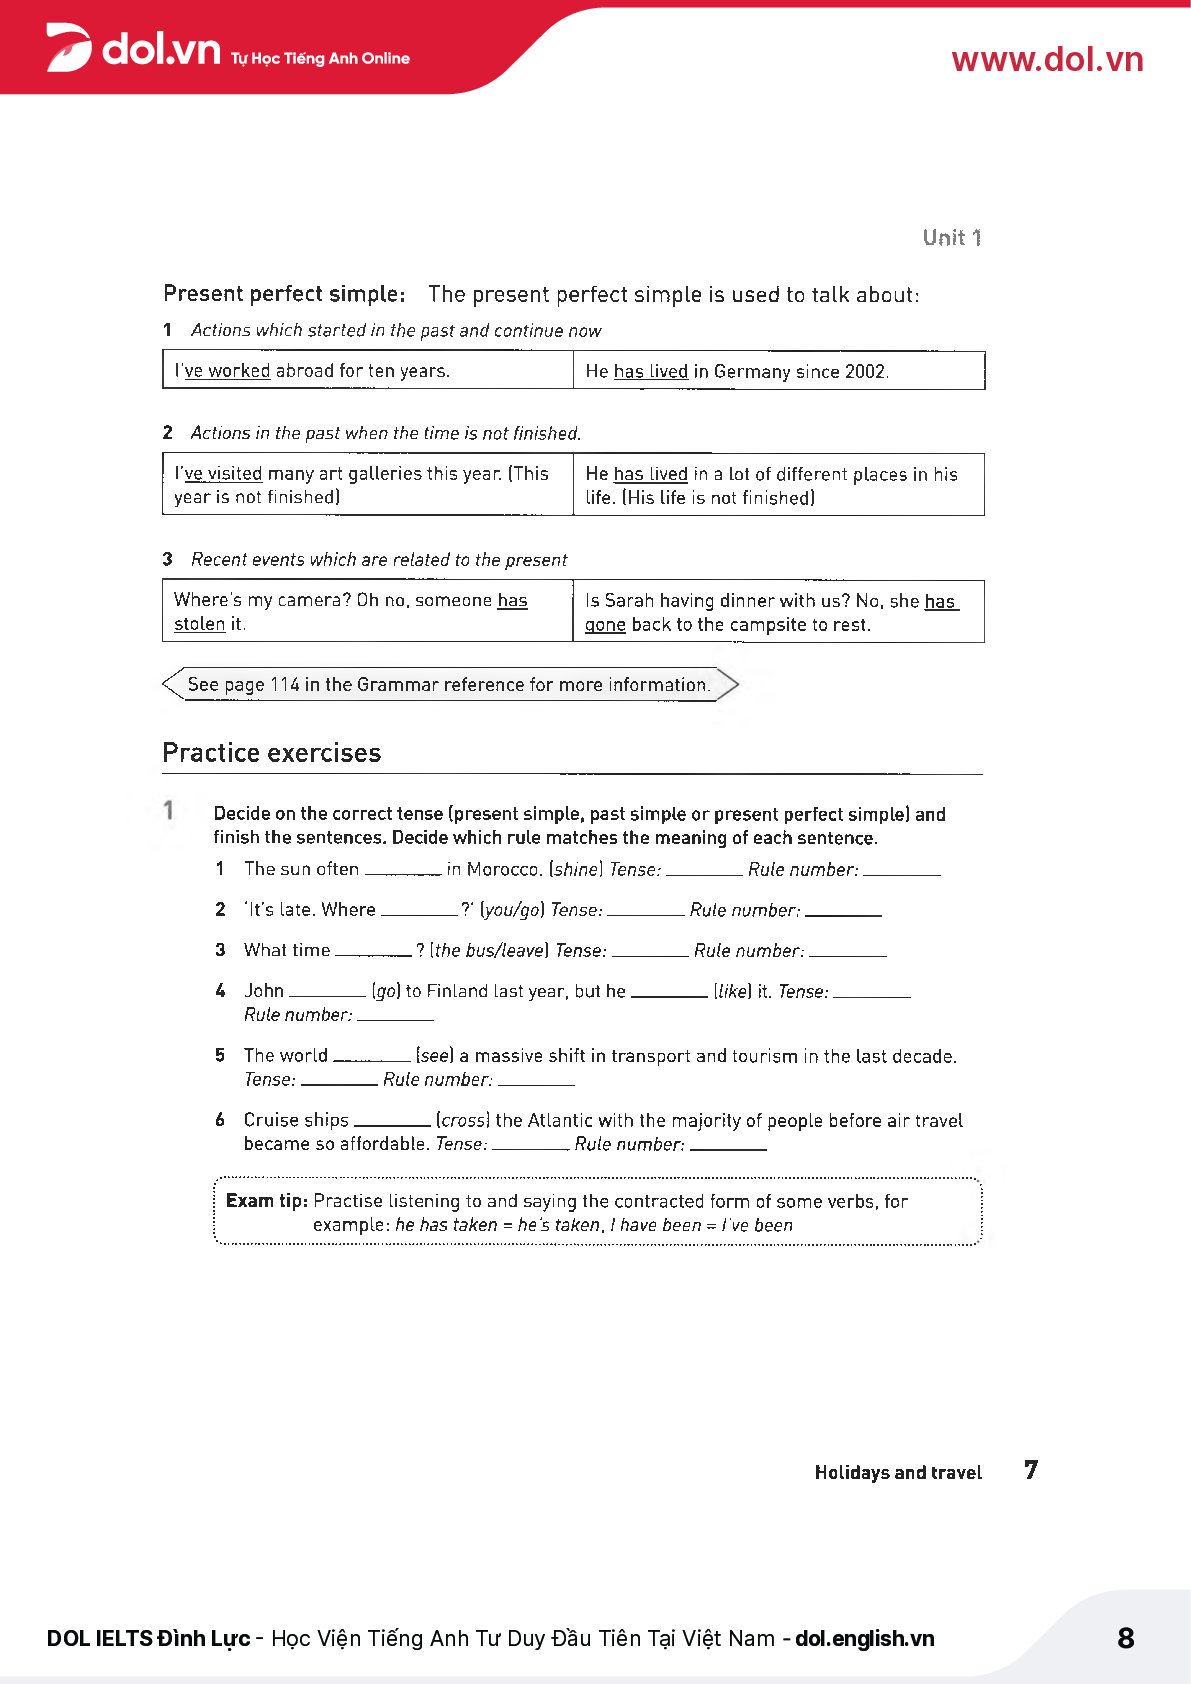 Sách Collins Grammar For IELTS pdf | Xem online, tải PDF miễn phí (trang 8)